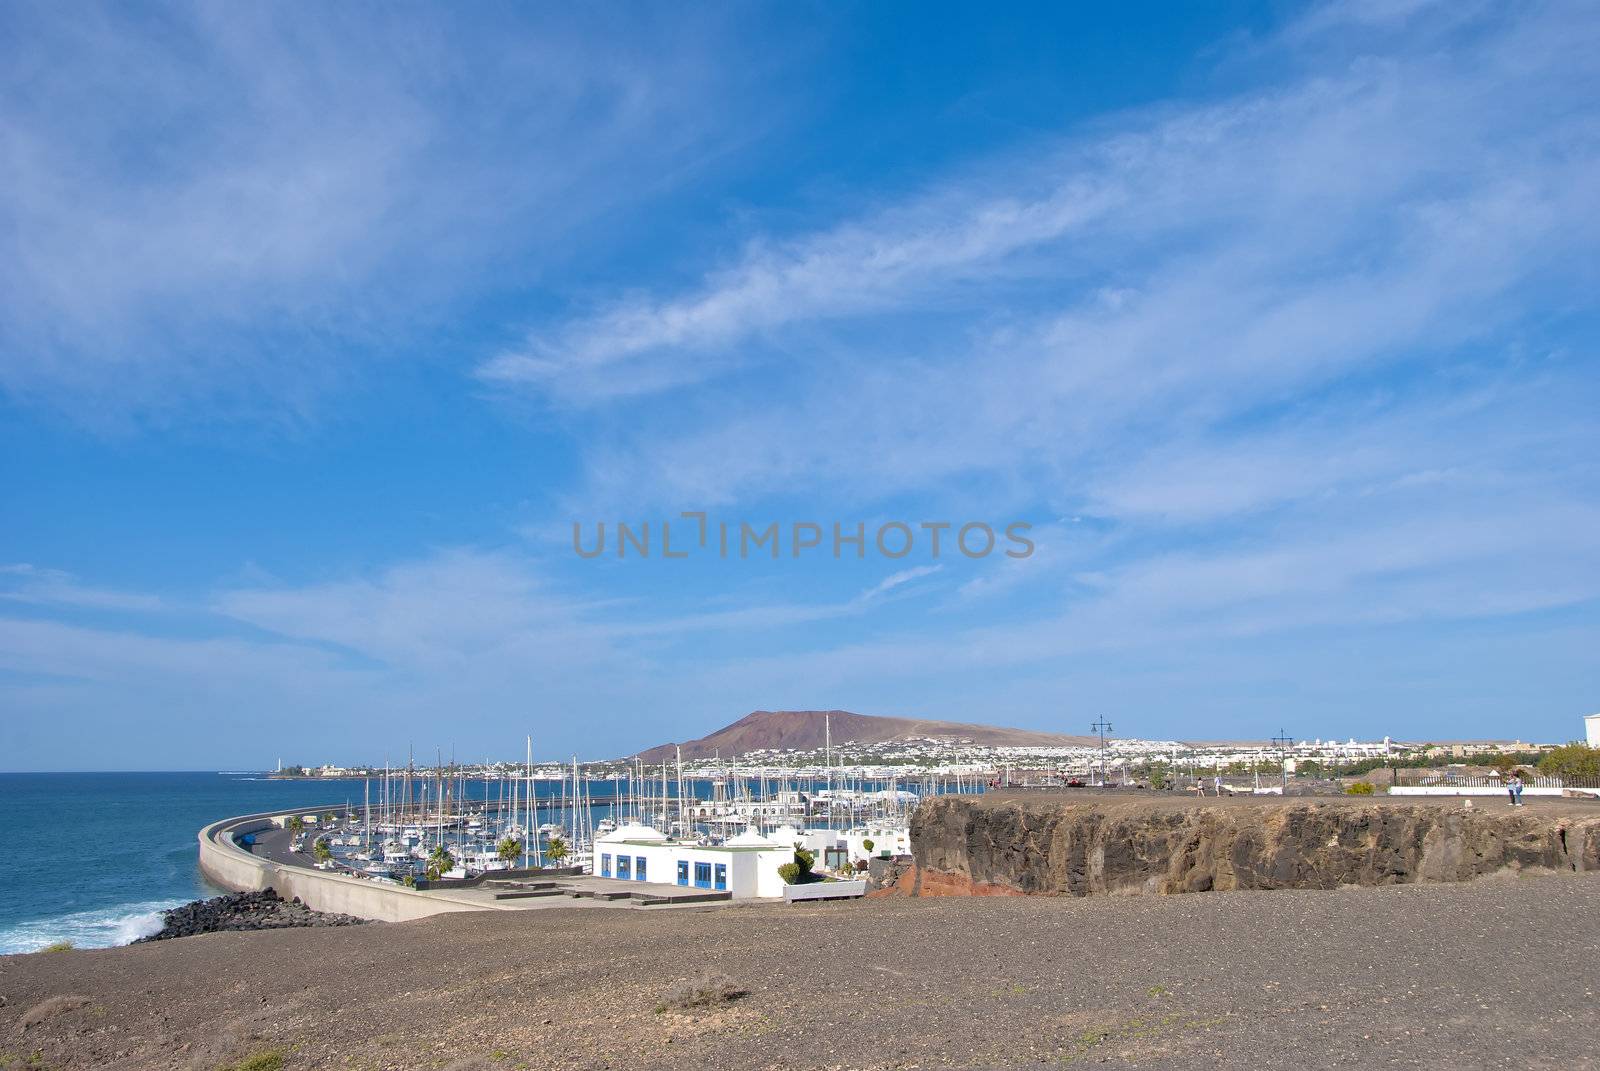 A general view of Playa Blanca Lanzarote